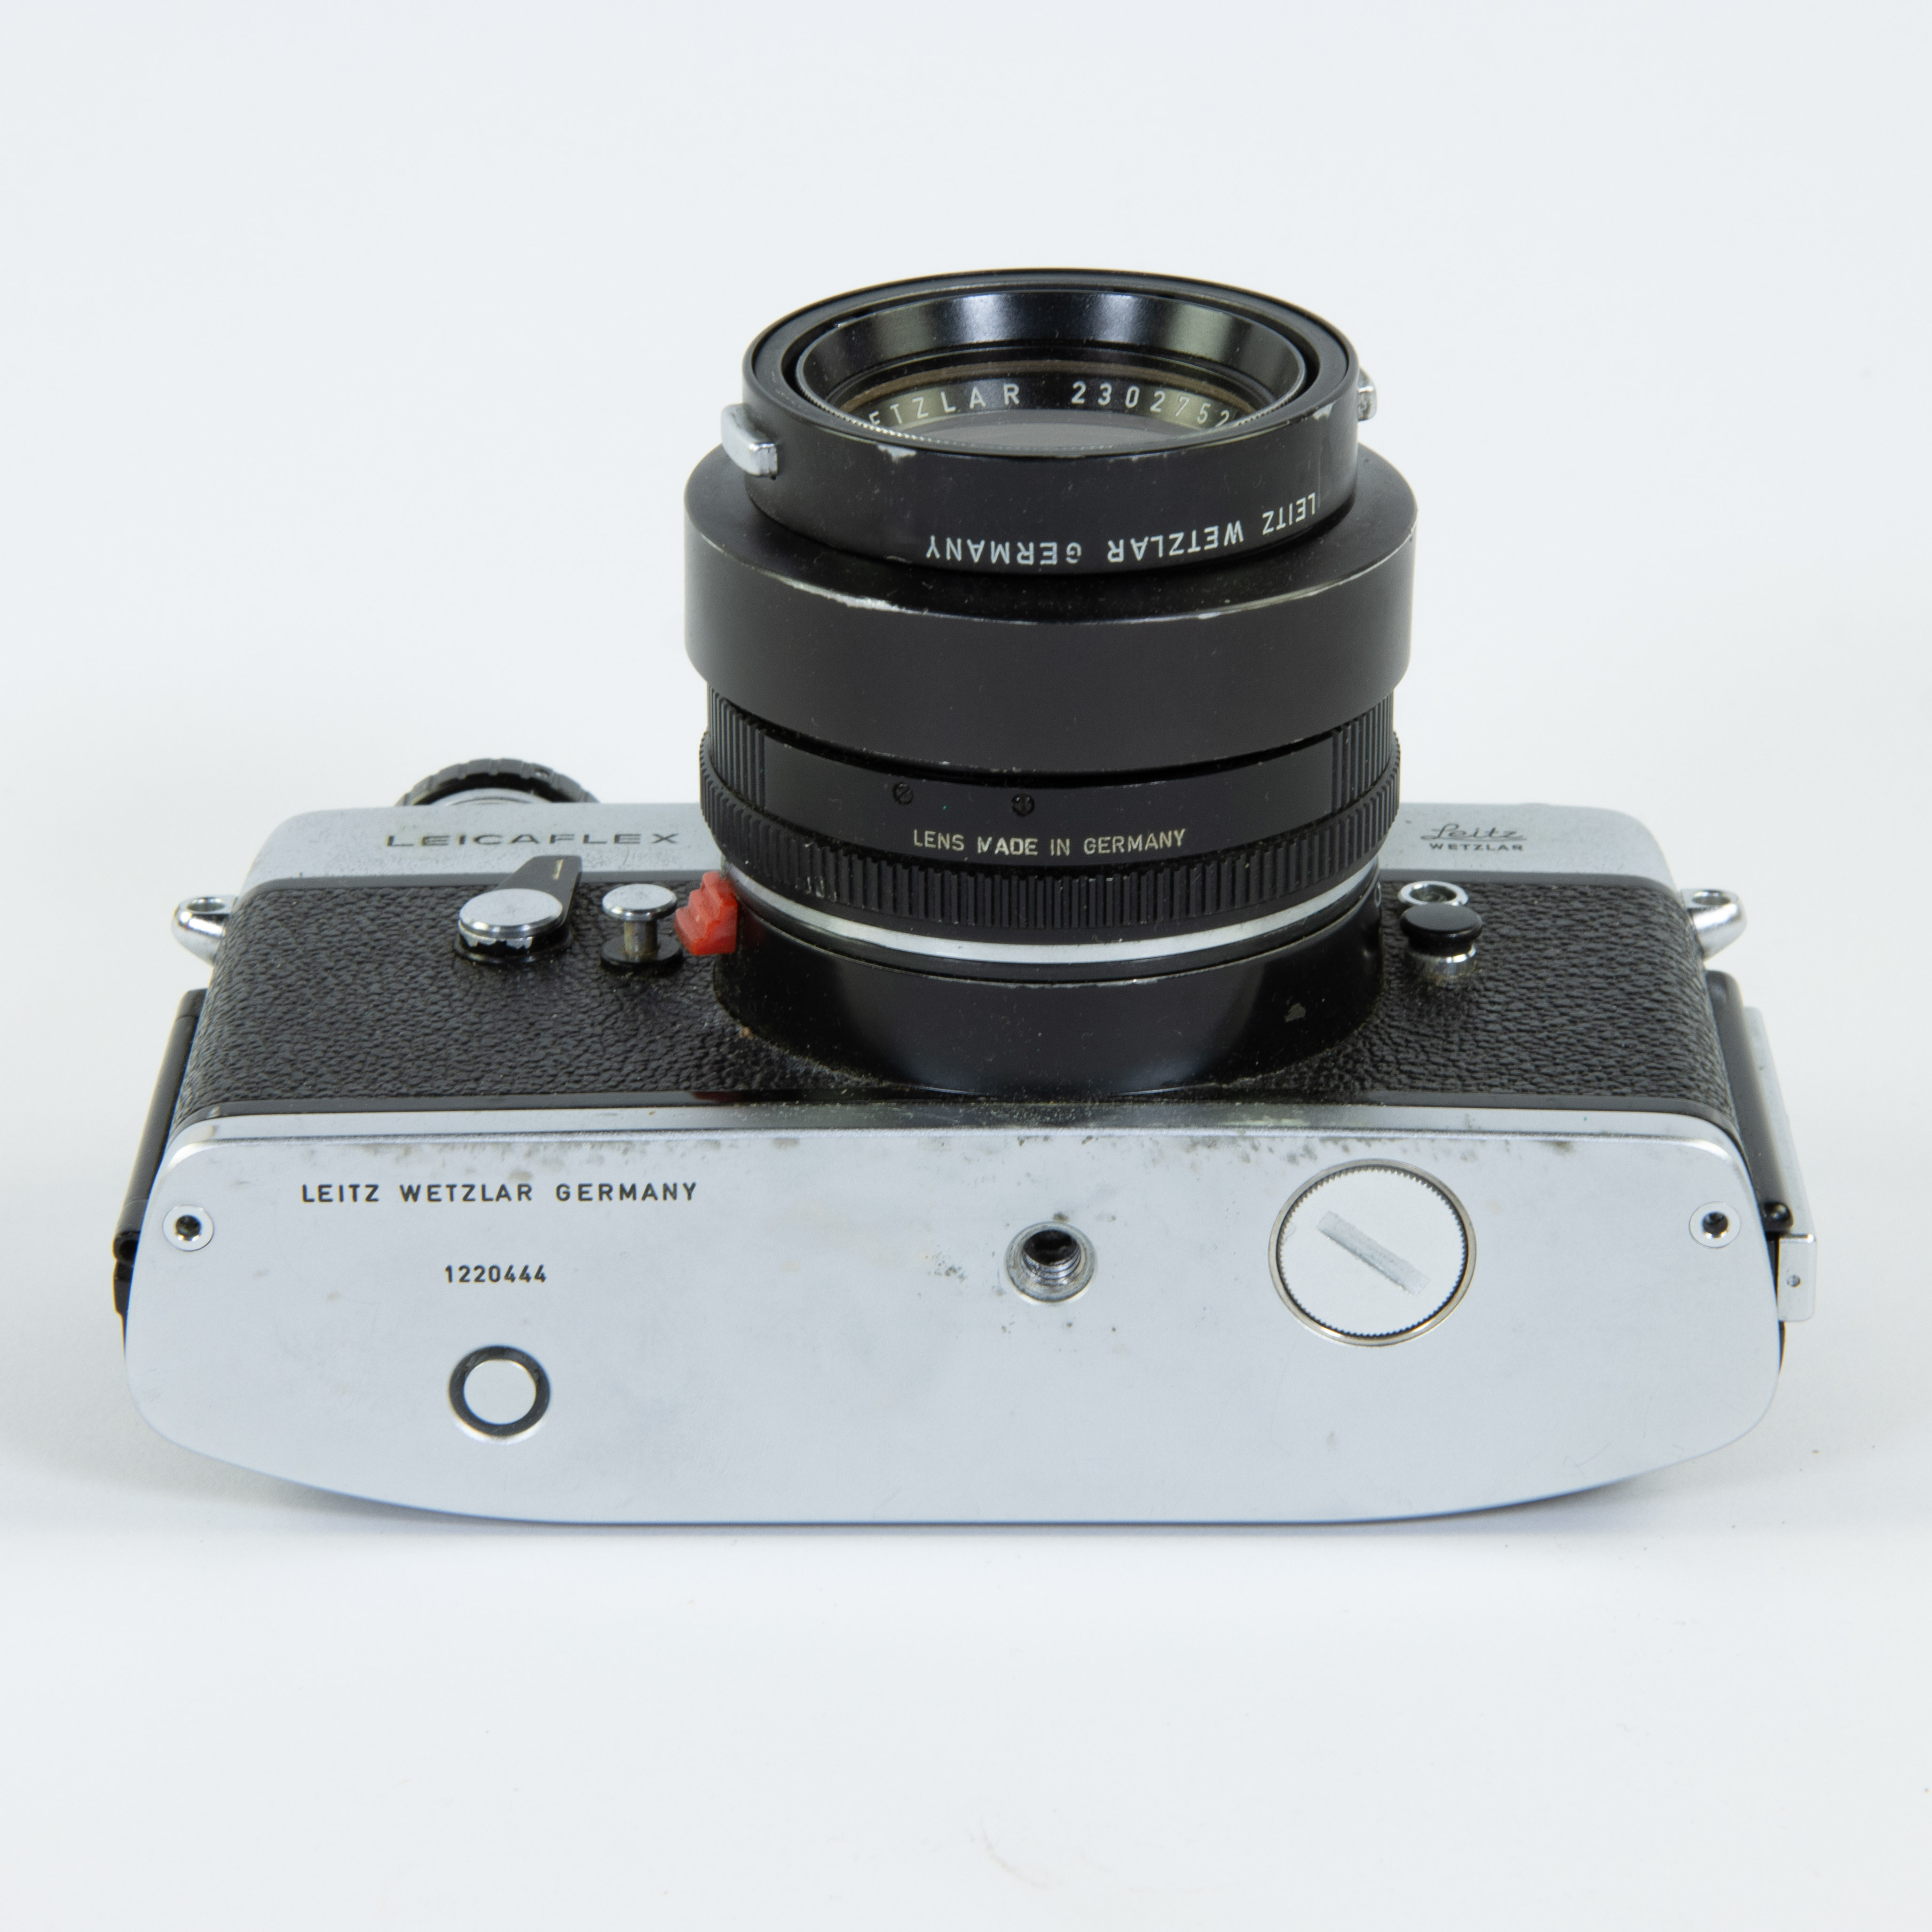 LEICAFLEX camera with accompanying telephoto lens - Image 8 of 11